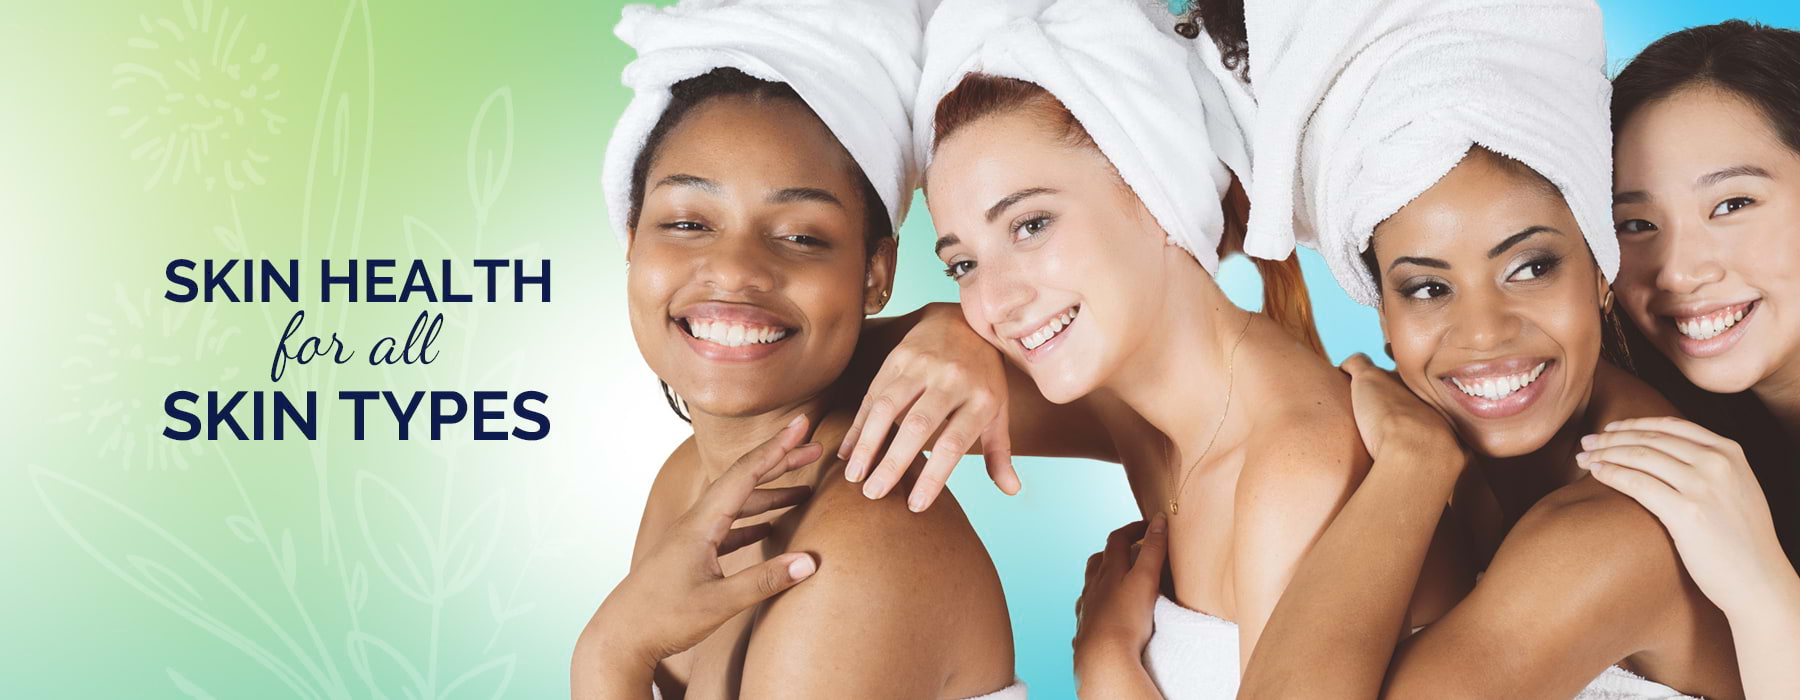 Skin health for all skin types at Enilsa Skin Essentials